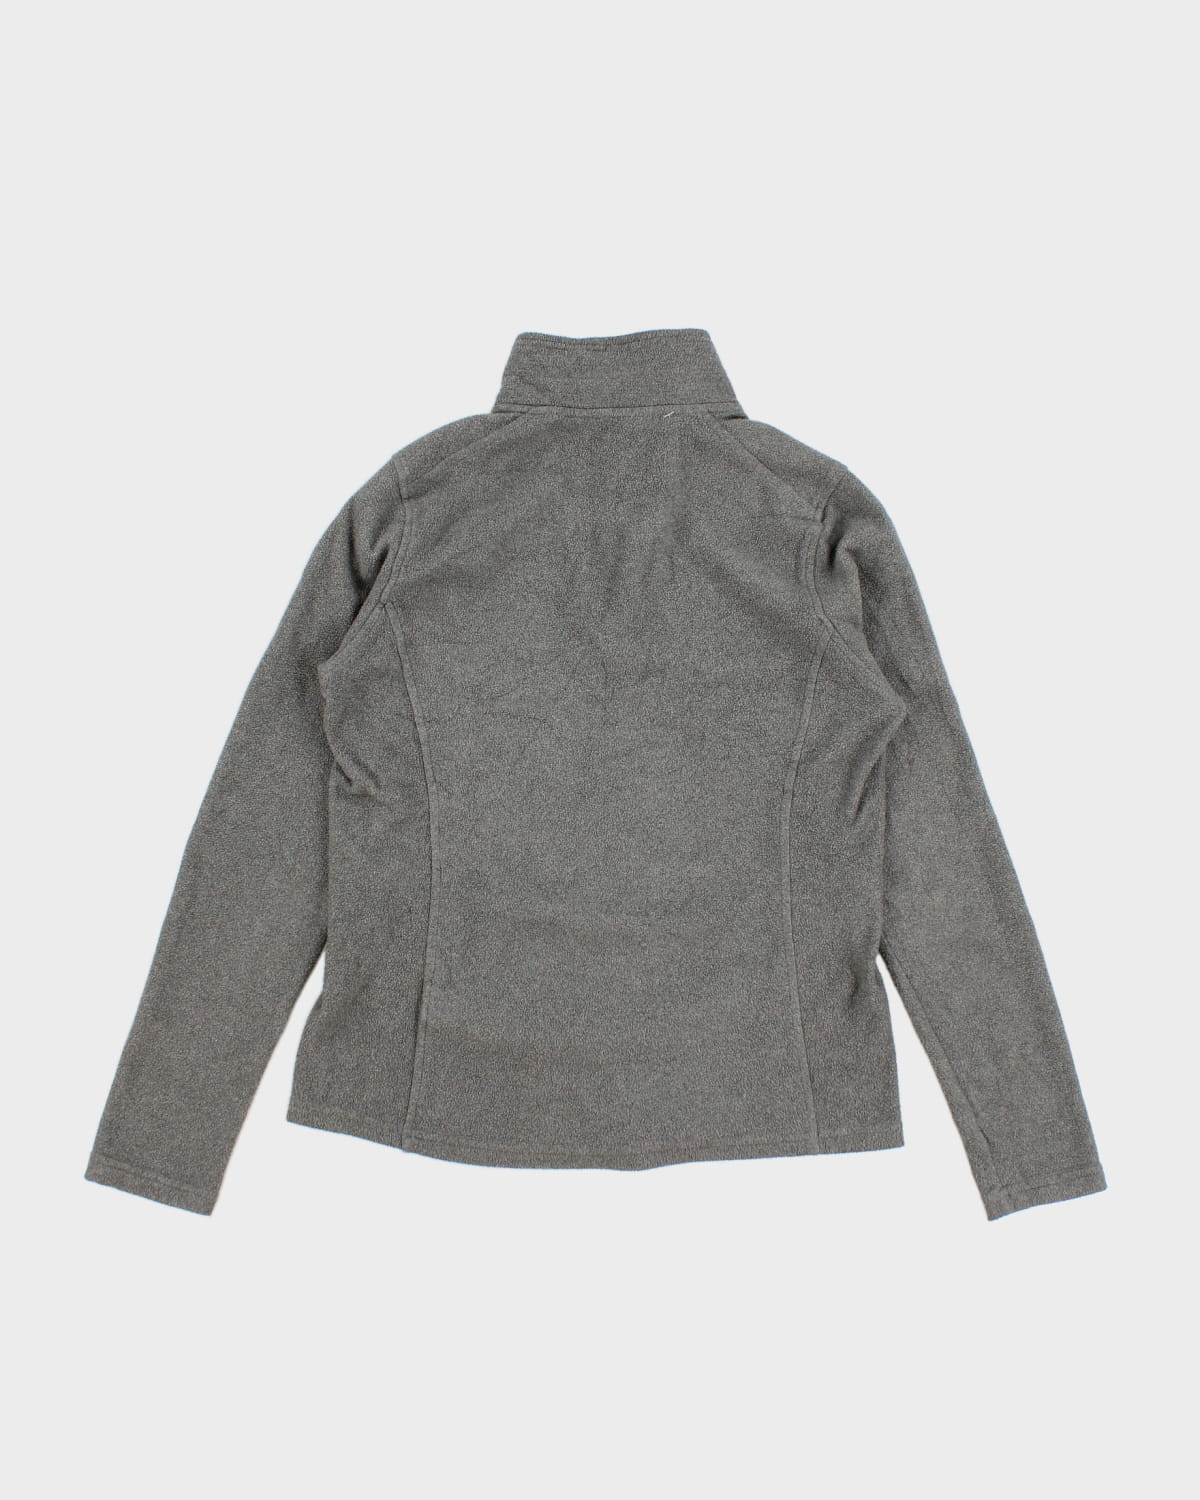 The North Face Grey Fleece Sweatshirt - S